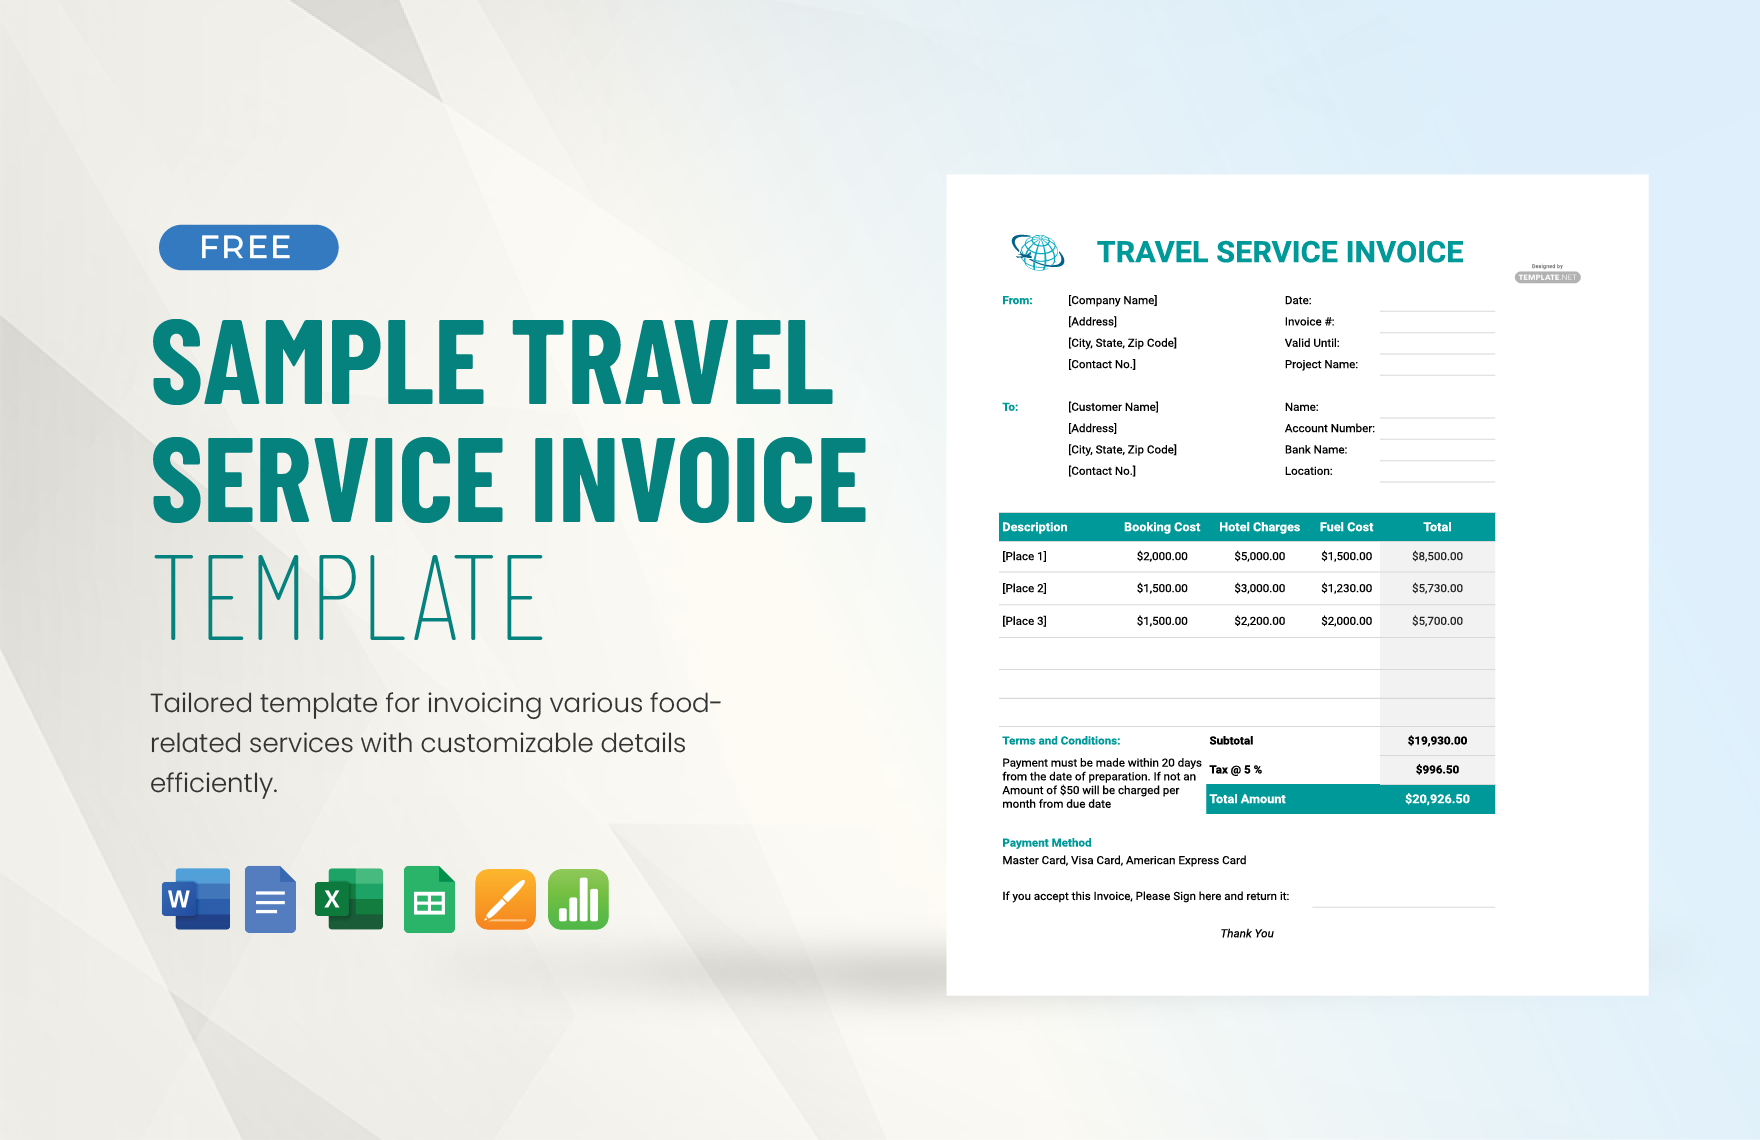 Sample Travel Service Invoice Template